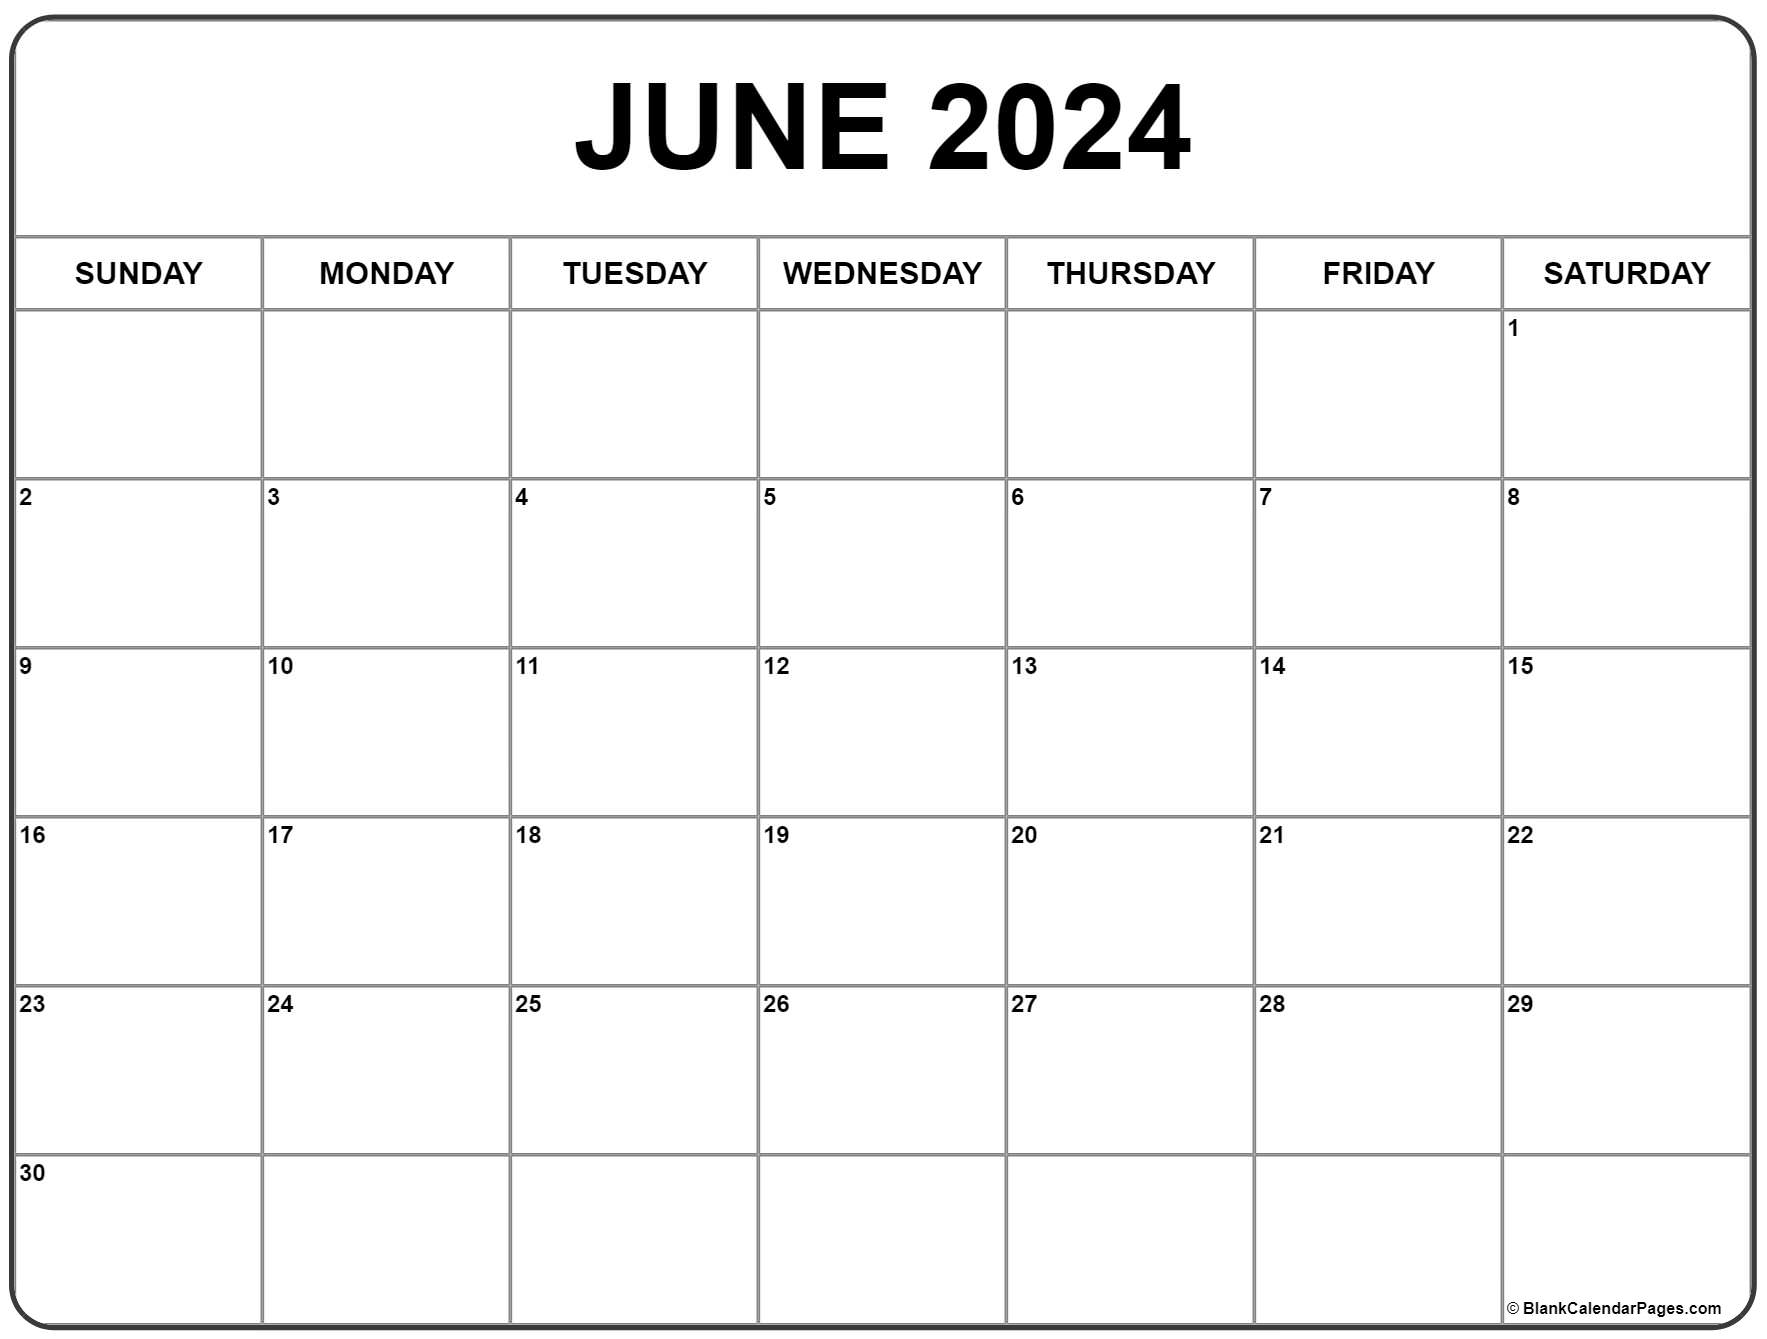 June 2024 Calendar | Free Printable Calendar for Printable June Calendar 2024 Free